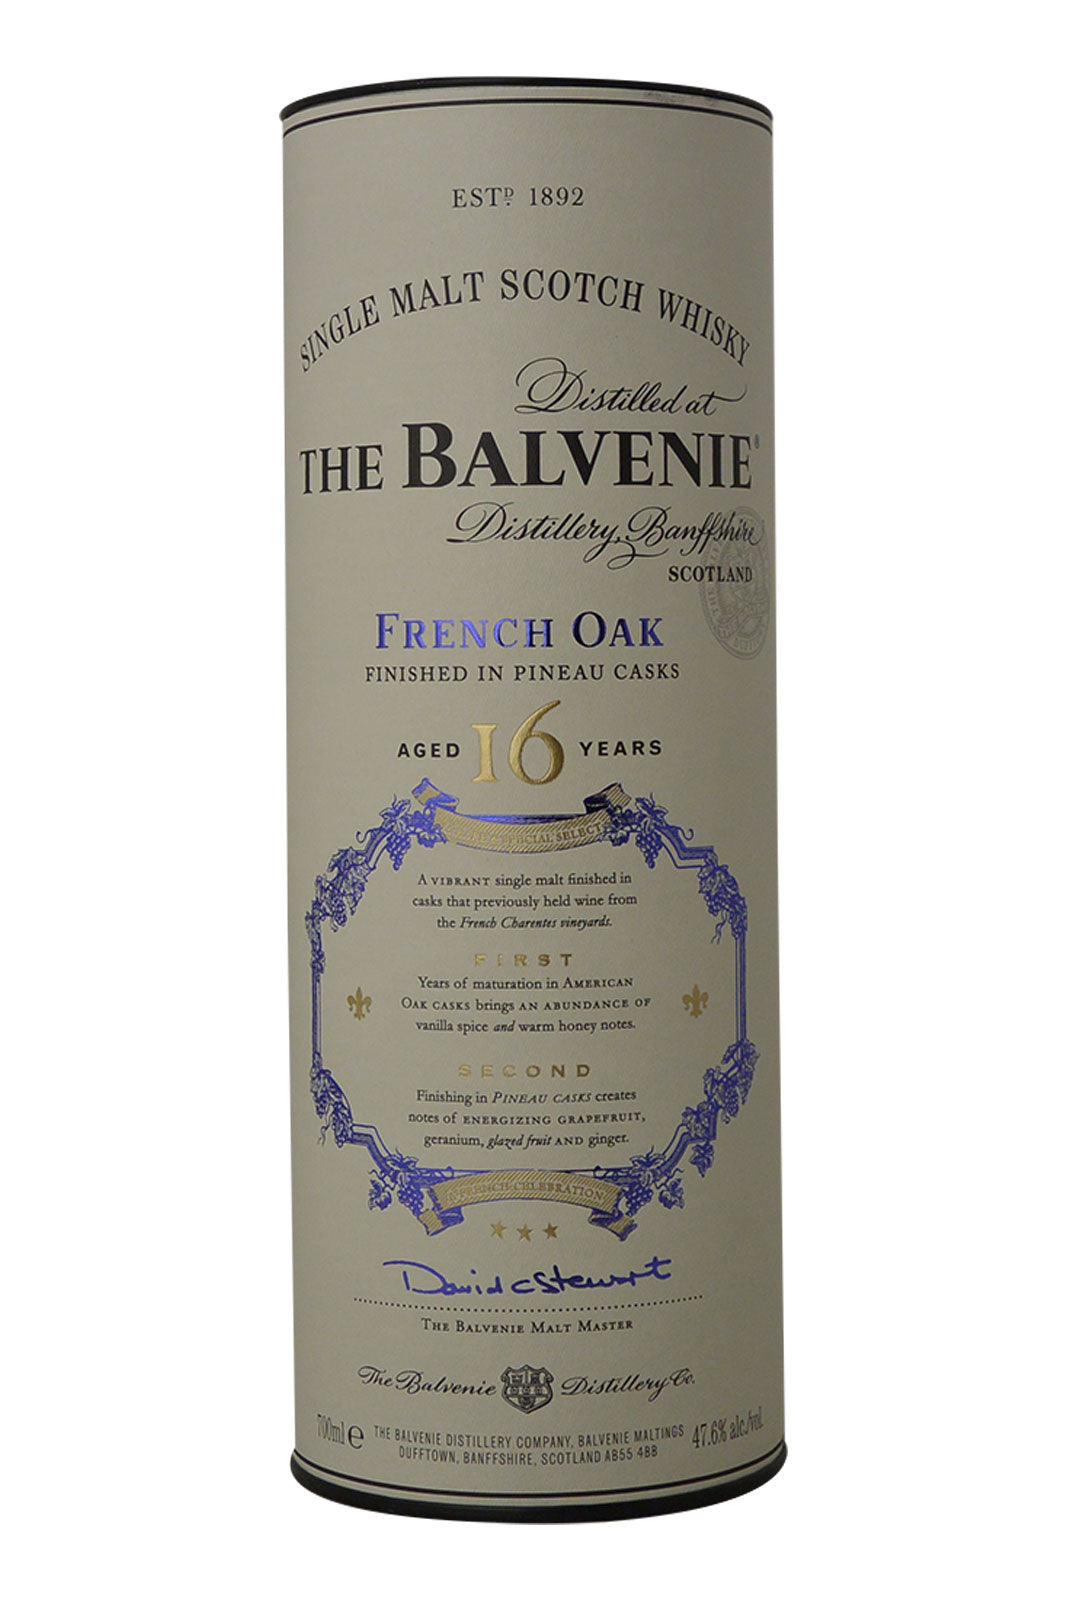 Balvenie 16 Year Old French Oak Pineau Cask Finish